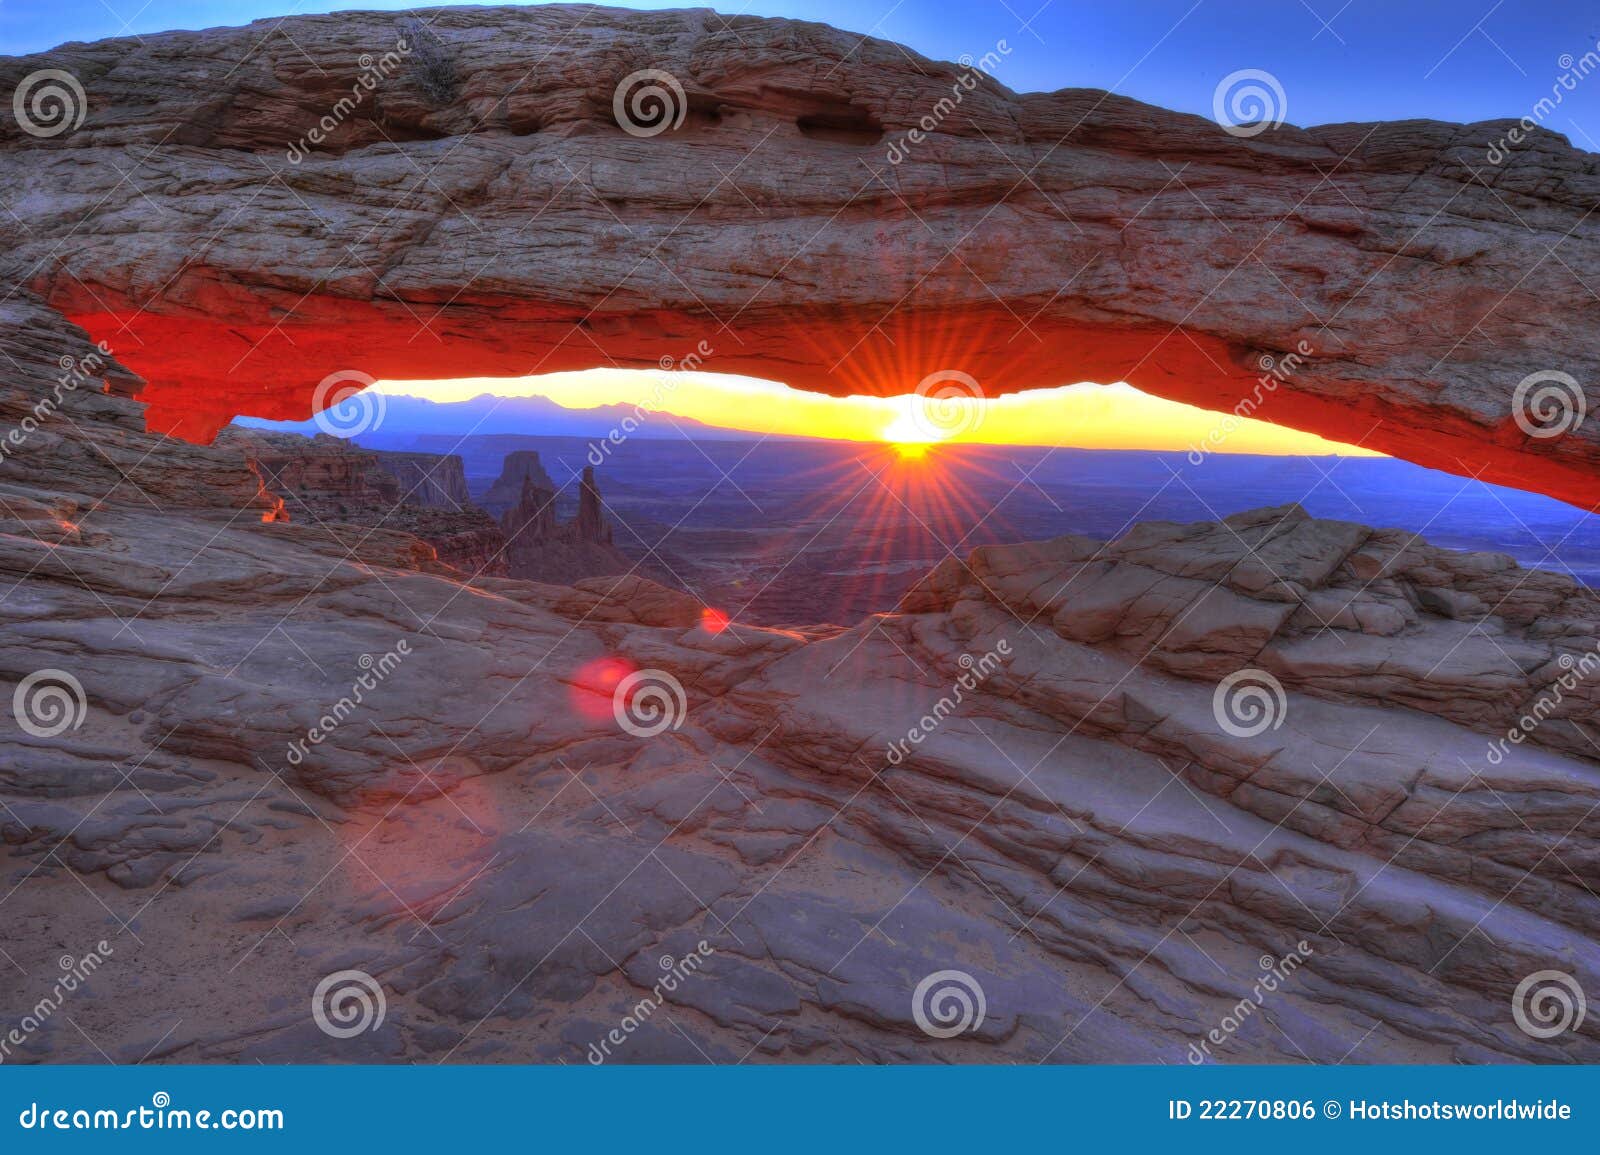 mesa arch sunrise, canyonlands, moab, utah